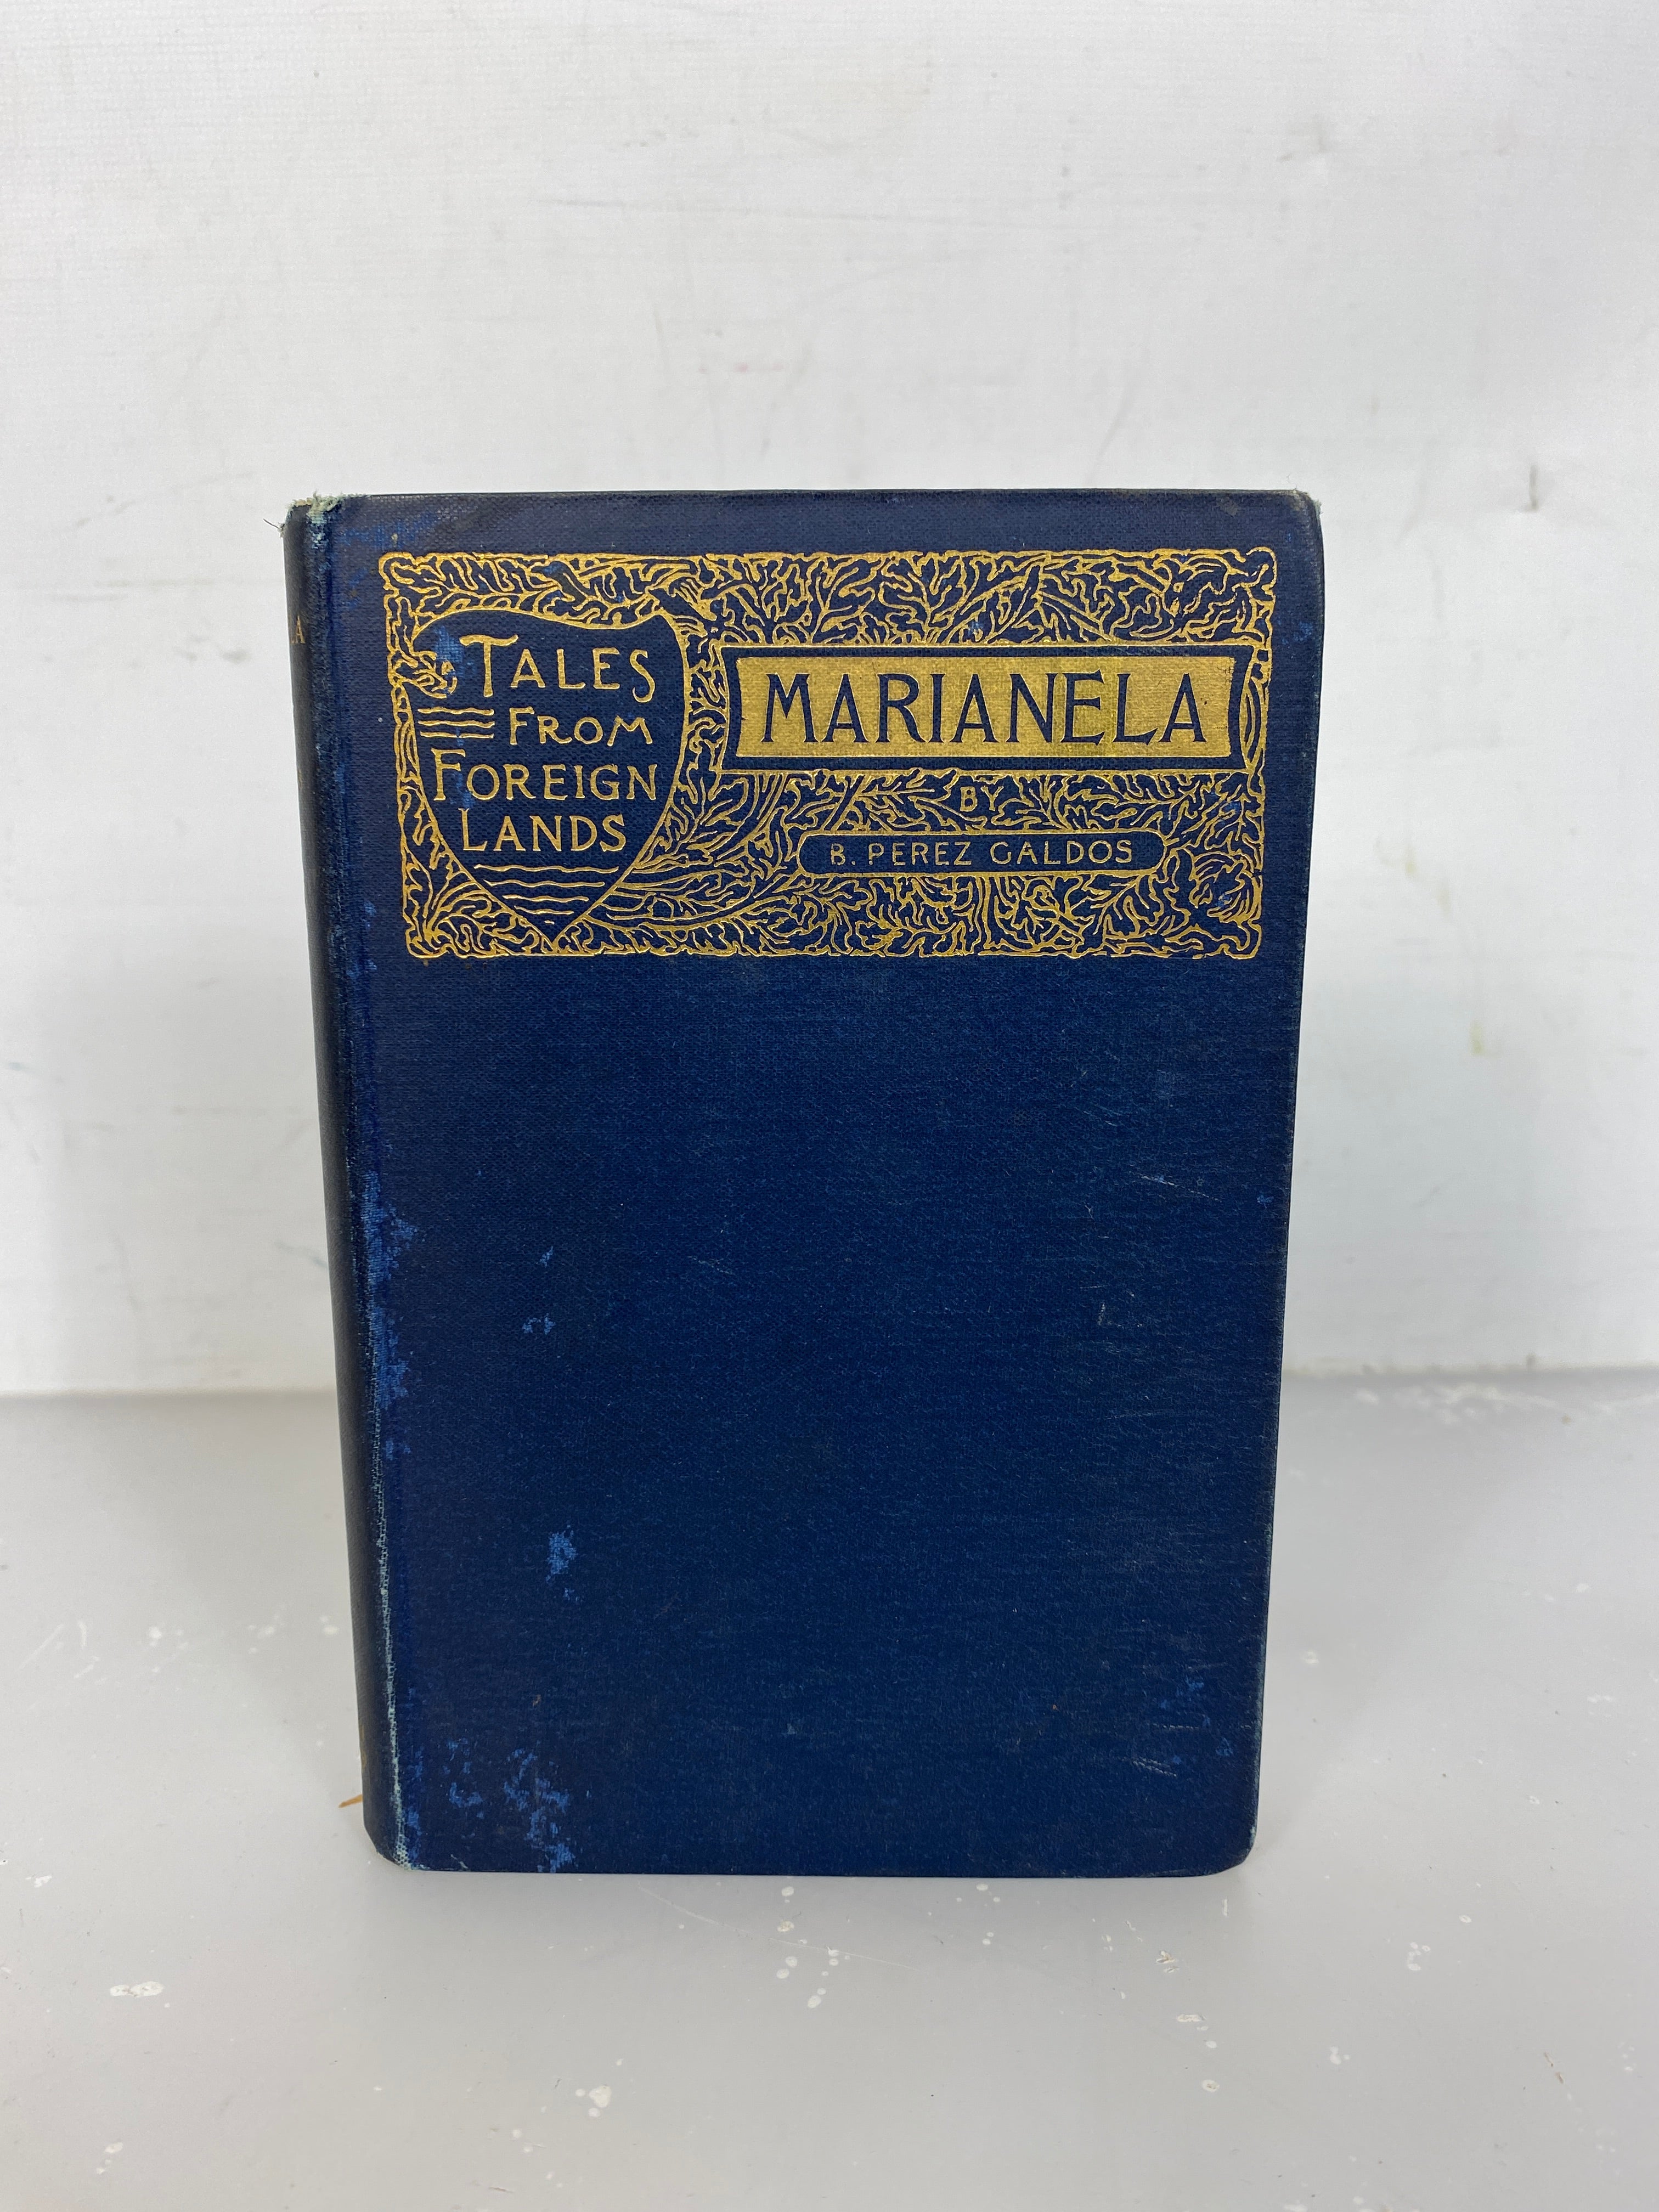 Marianela A Story of Spanish Love by B. Perez Galdos 1899 HC